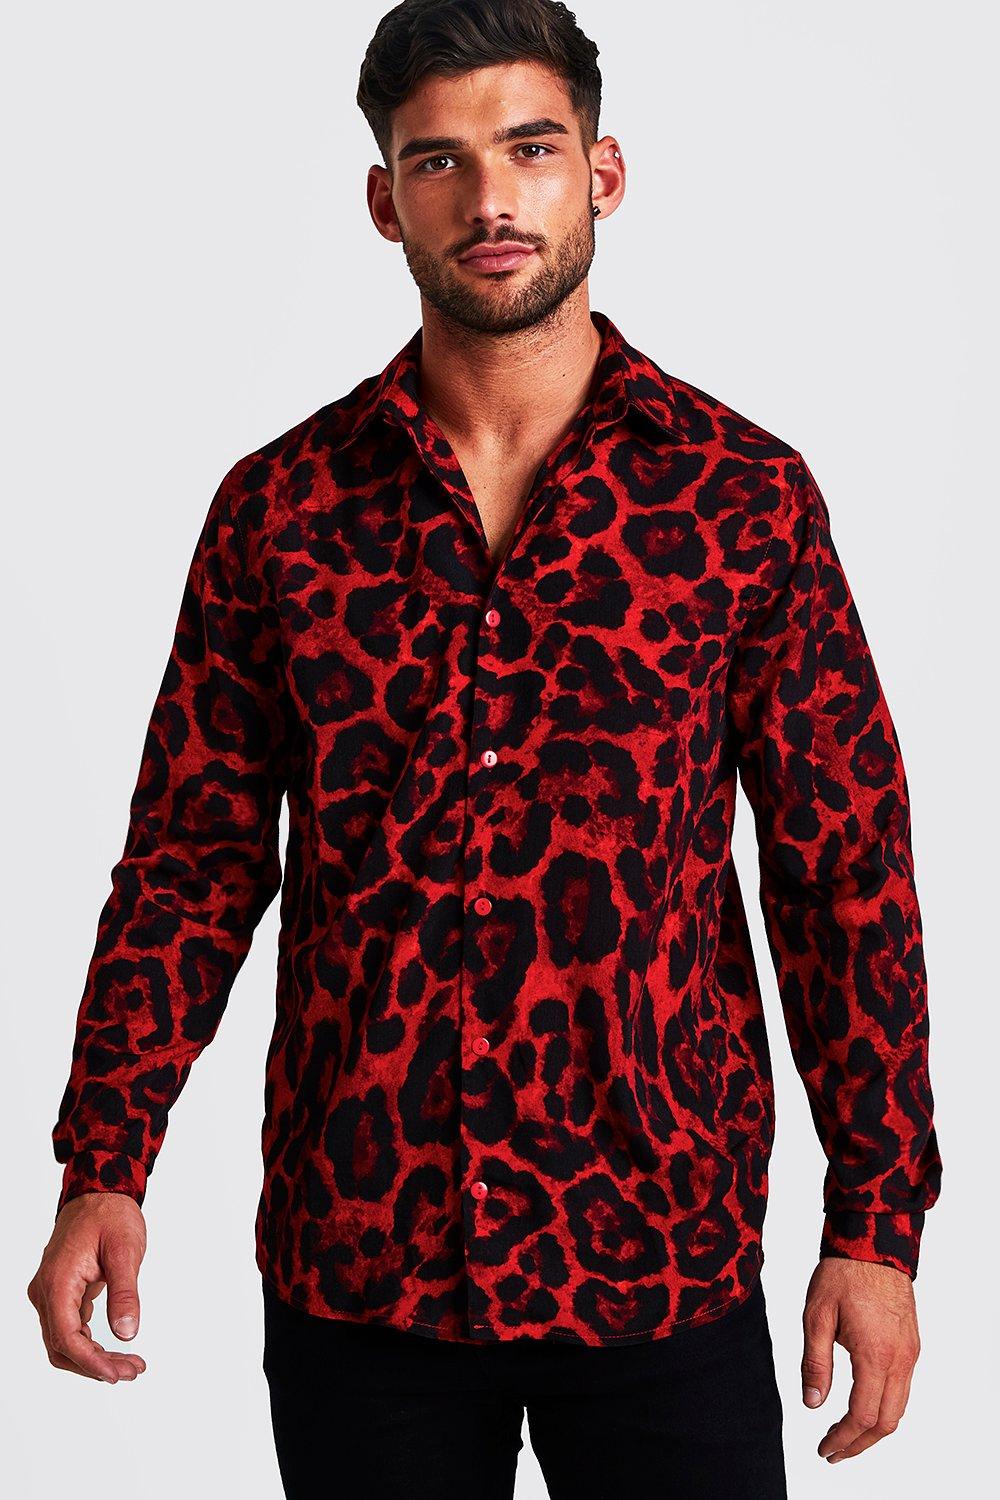 red zebra print shirt